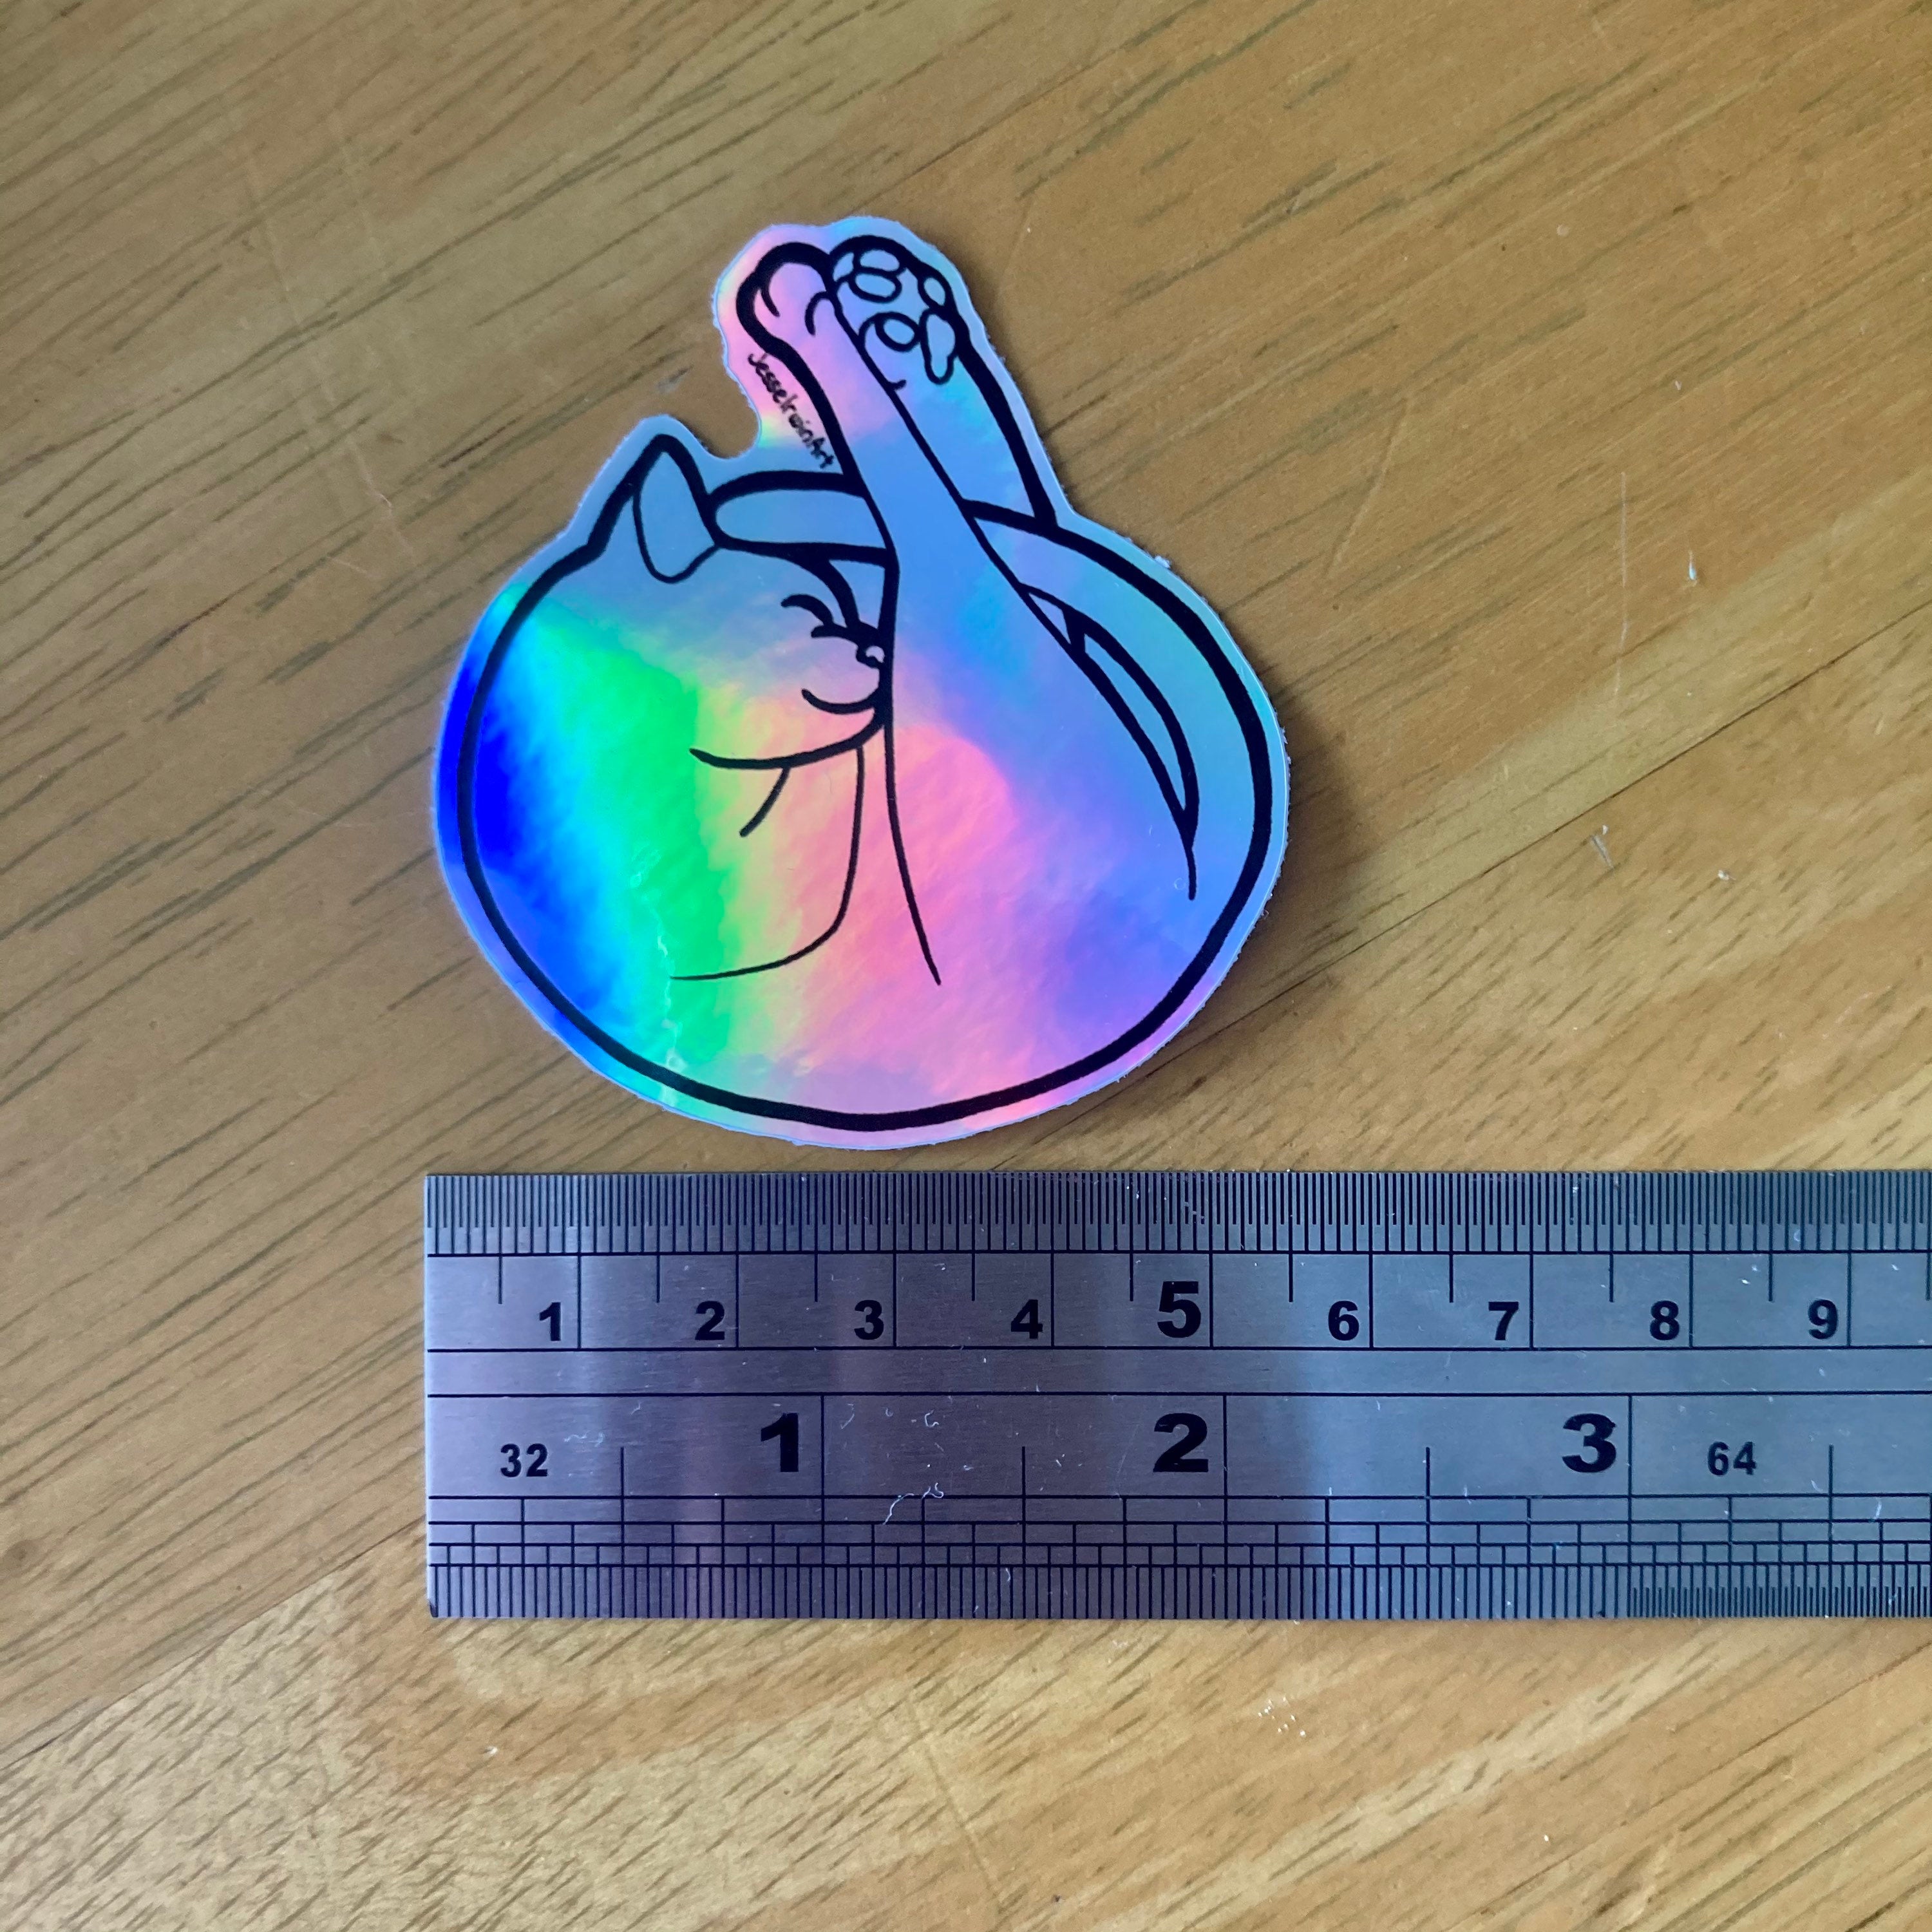 Curled Cat Holo Rainbow Vinyl Sticker - Holographic Silver Cute Sleeping Kitty - Die Cut Vinyl Sticker - Laptop Decal